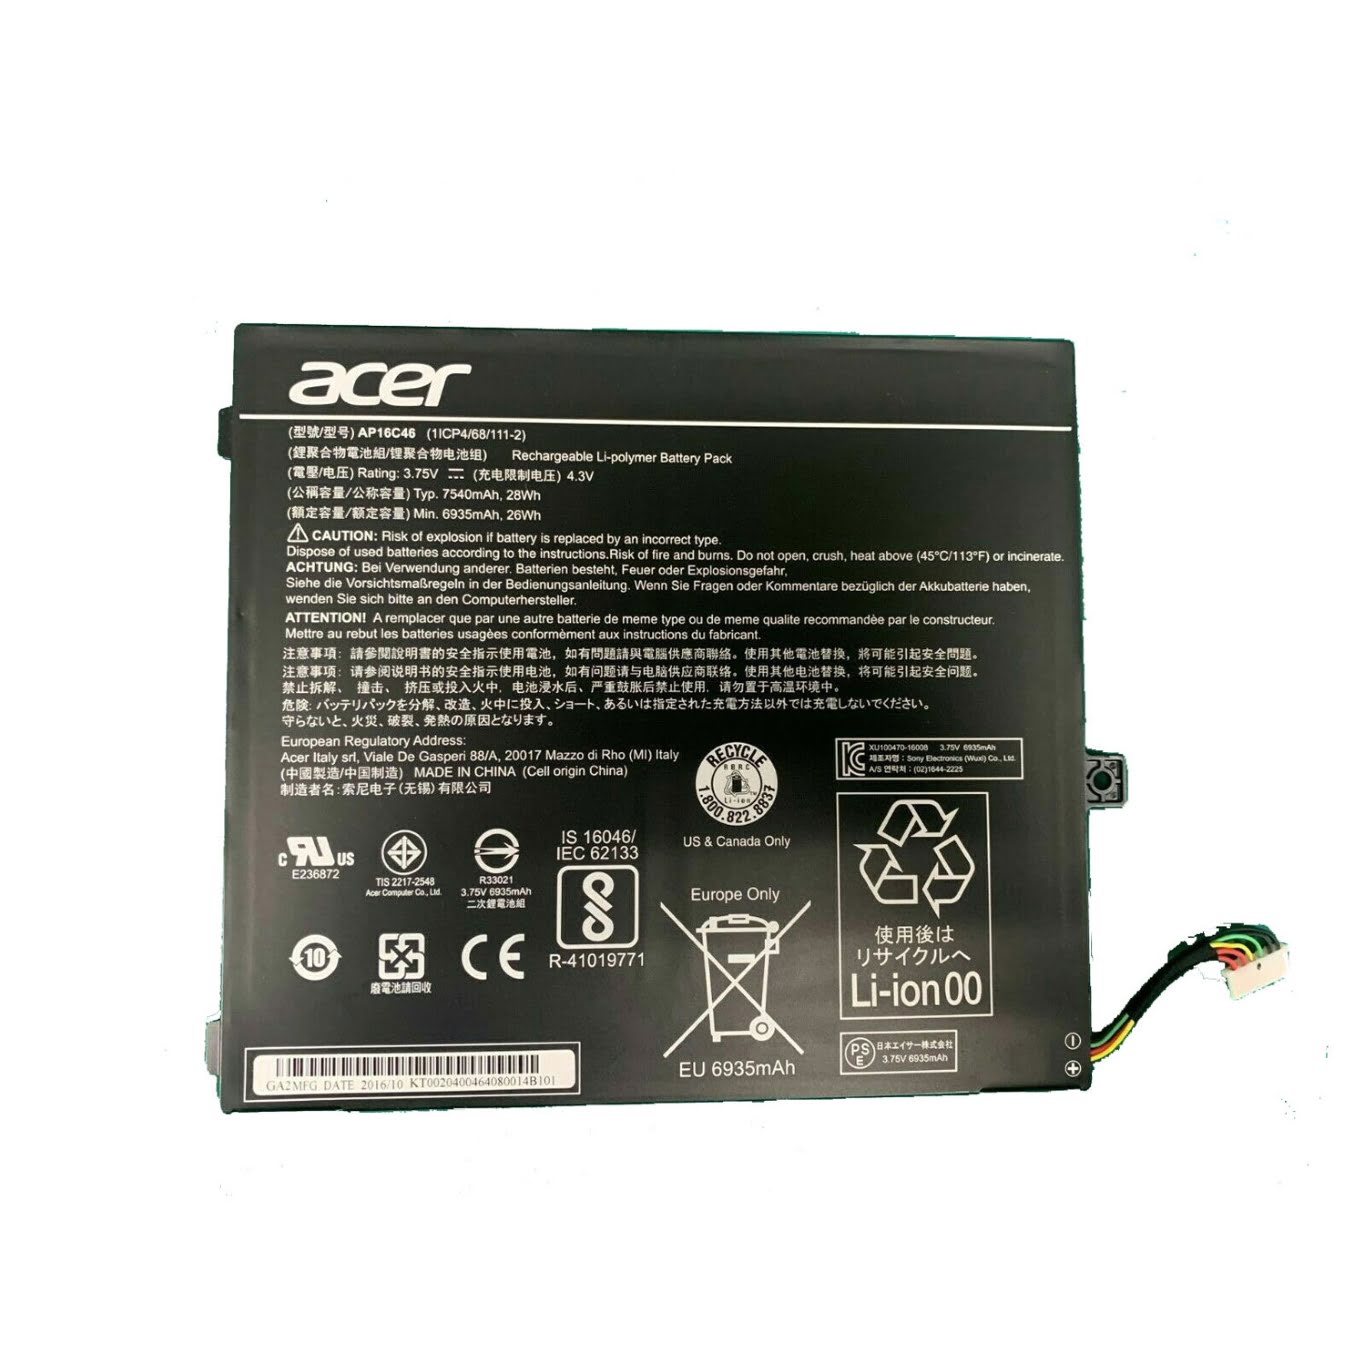 Acer Kt.00204.004, Ap16c46 Laptop Akku Fuer Aspire E5-573, Interruptor Sw5-017-17bu ersatz